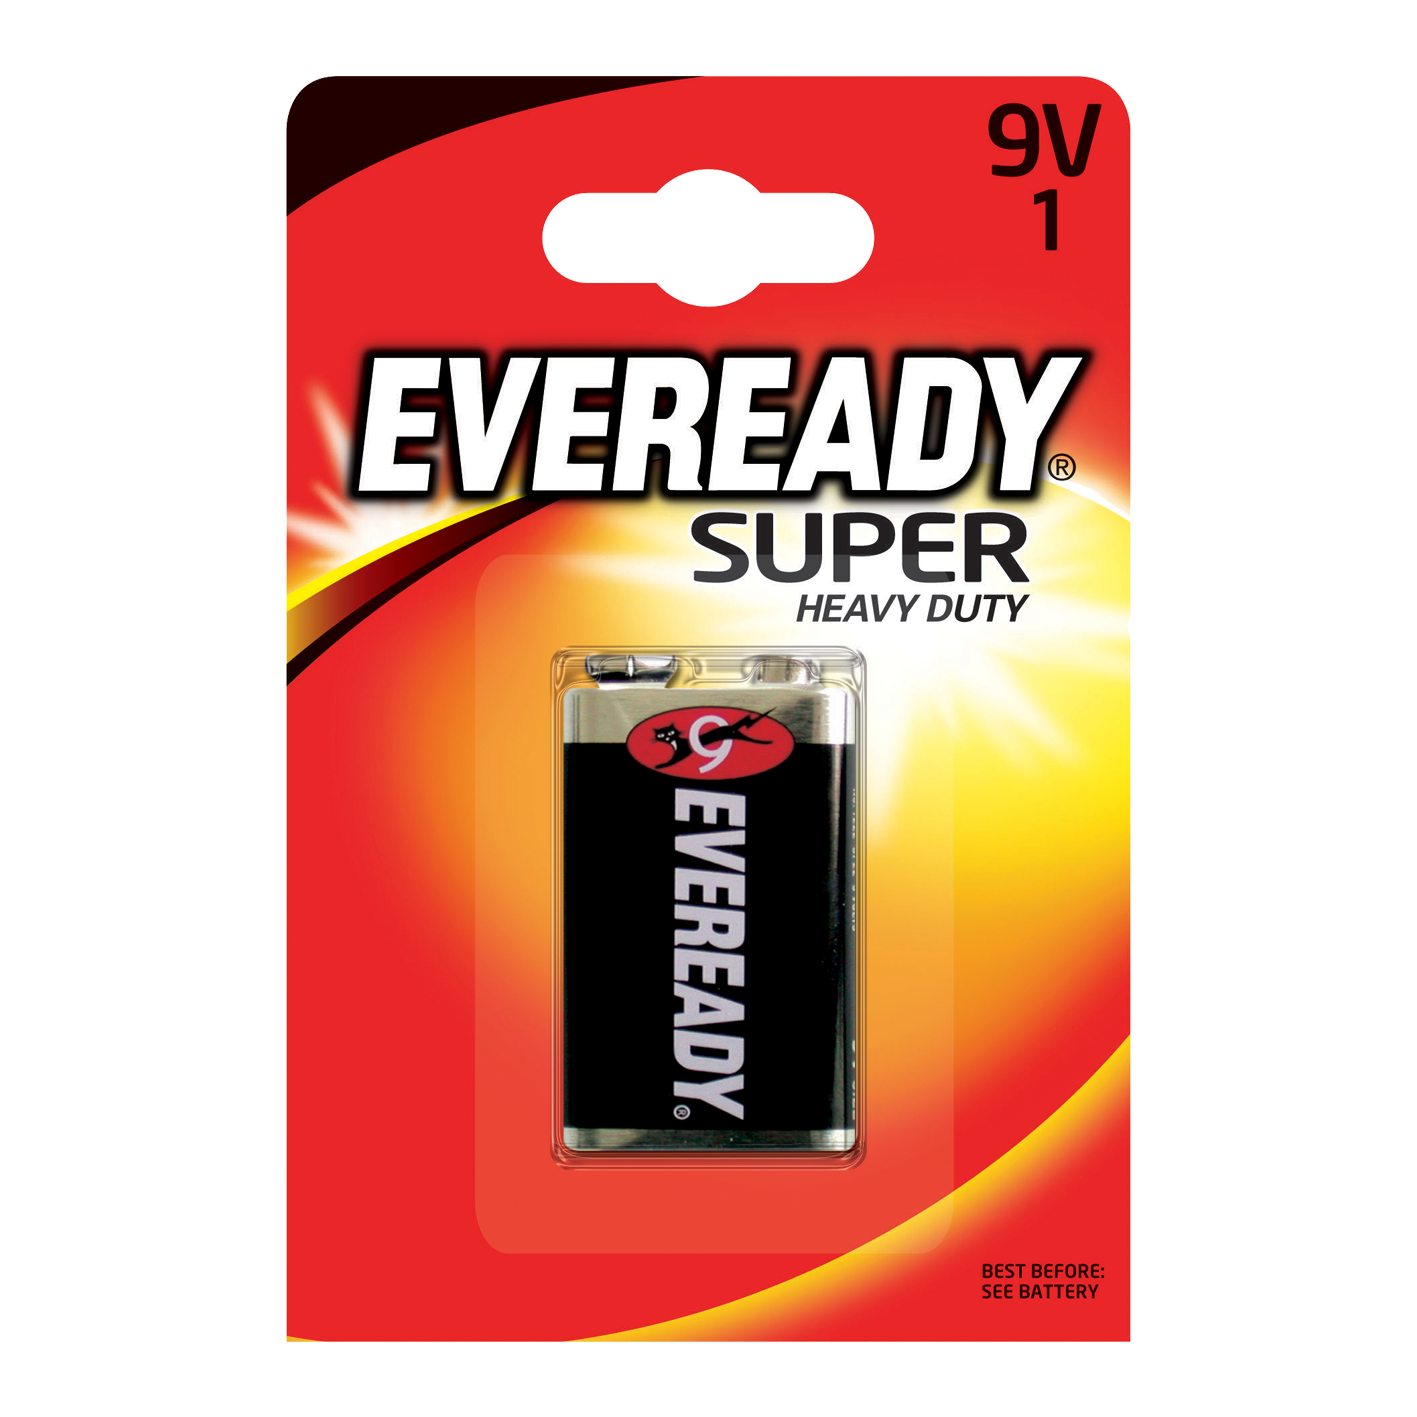 Eveready 9V Super Heavy Duty, paquete de 1